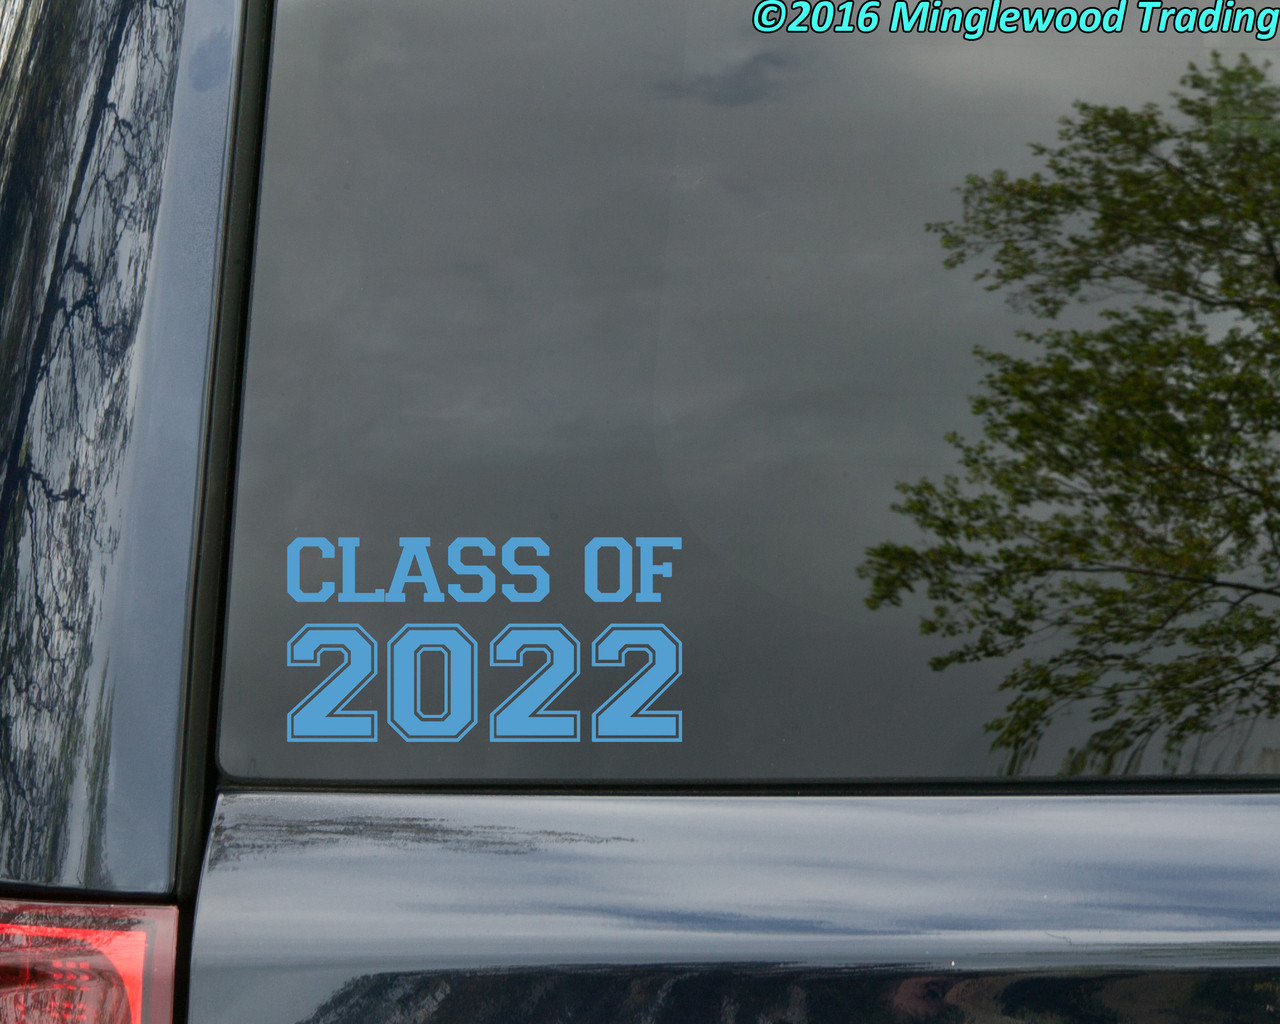 Class of 2024 Vinyl Sticker - Graduate High School College - Die Cut Decal